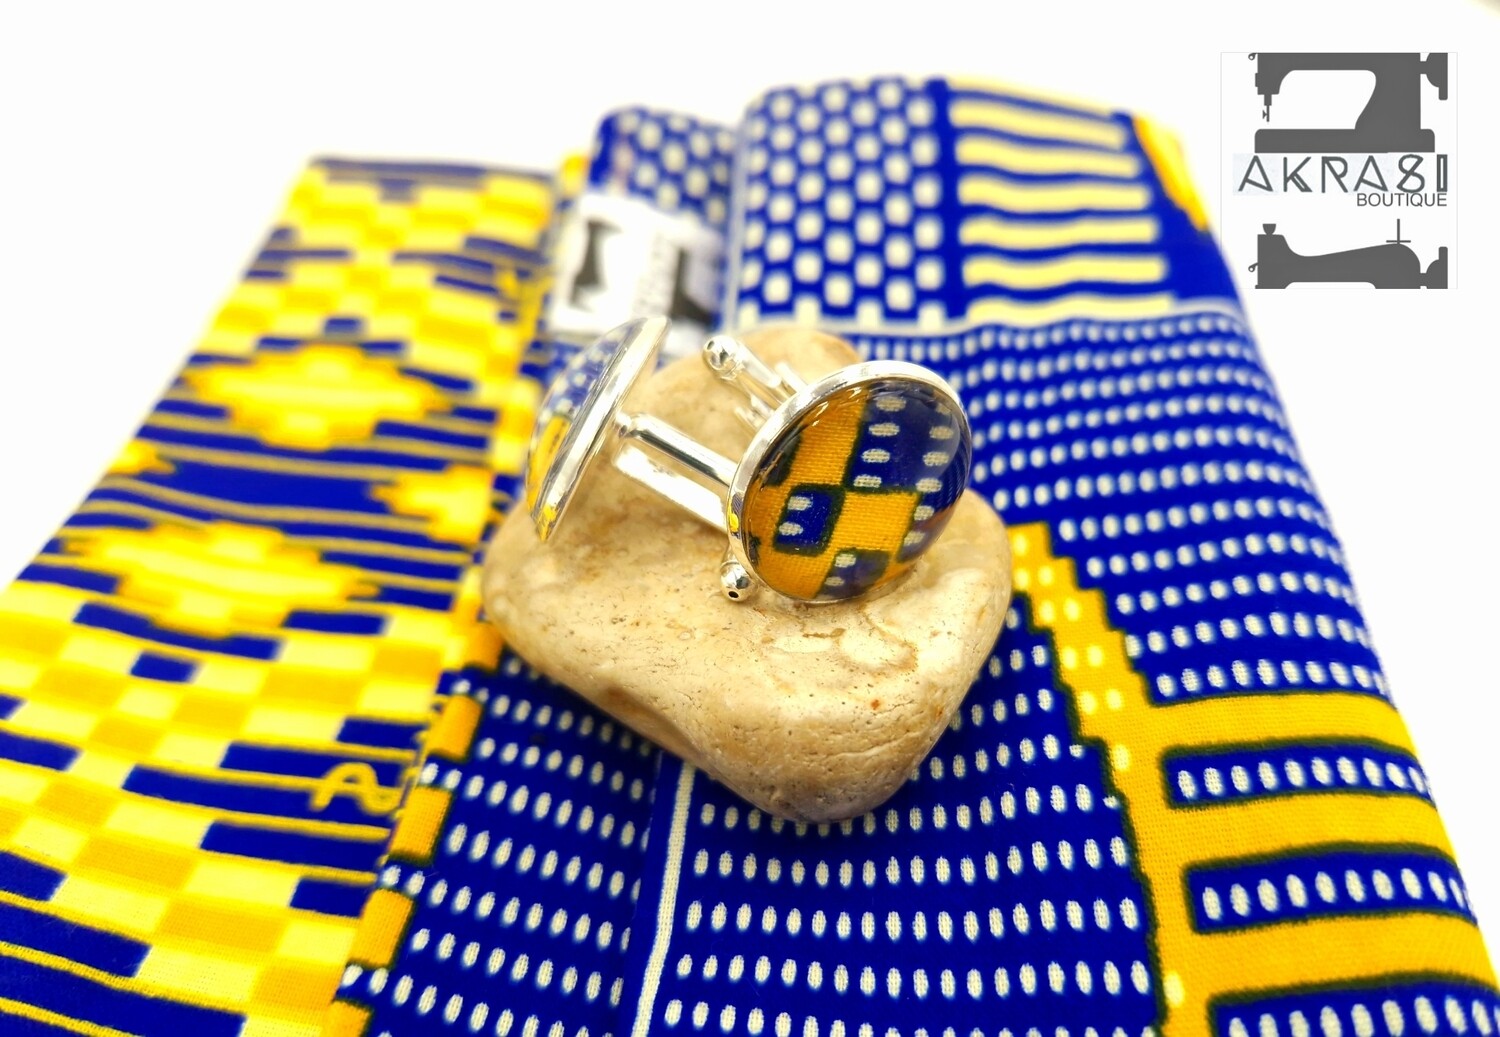 Kente wax print pocket square with cufflinks | men's accessories | Kente pocket square and cufflinks set